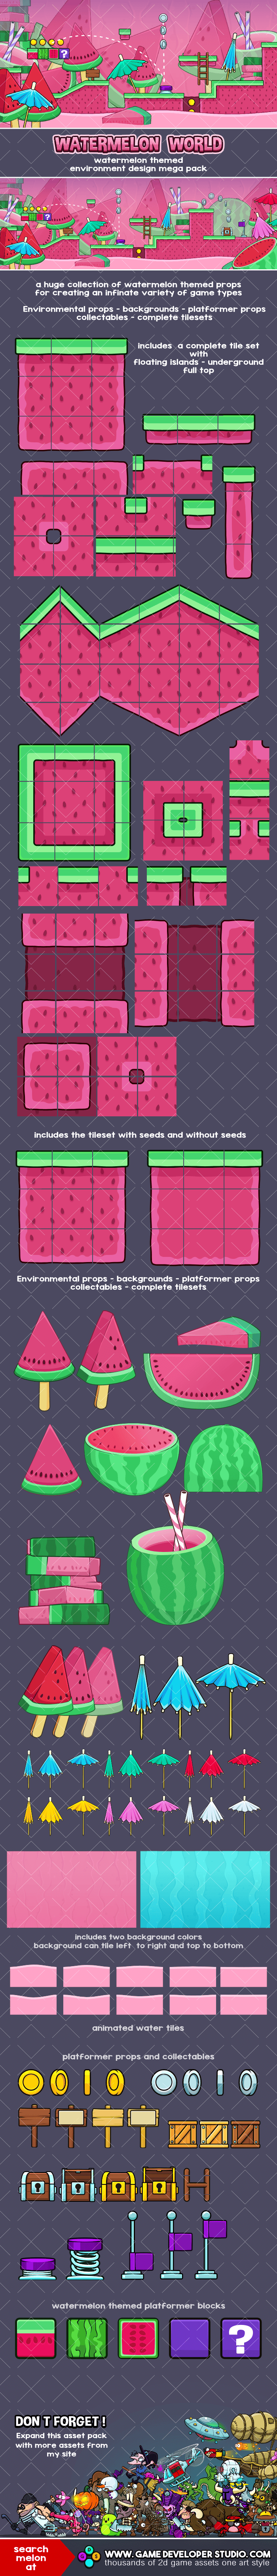 Watermelon environment creation mega pack